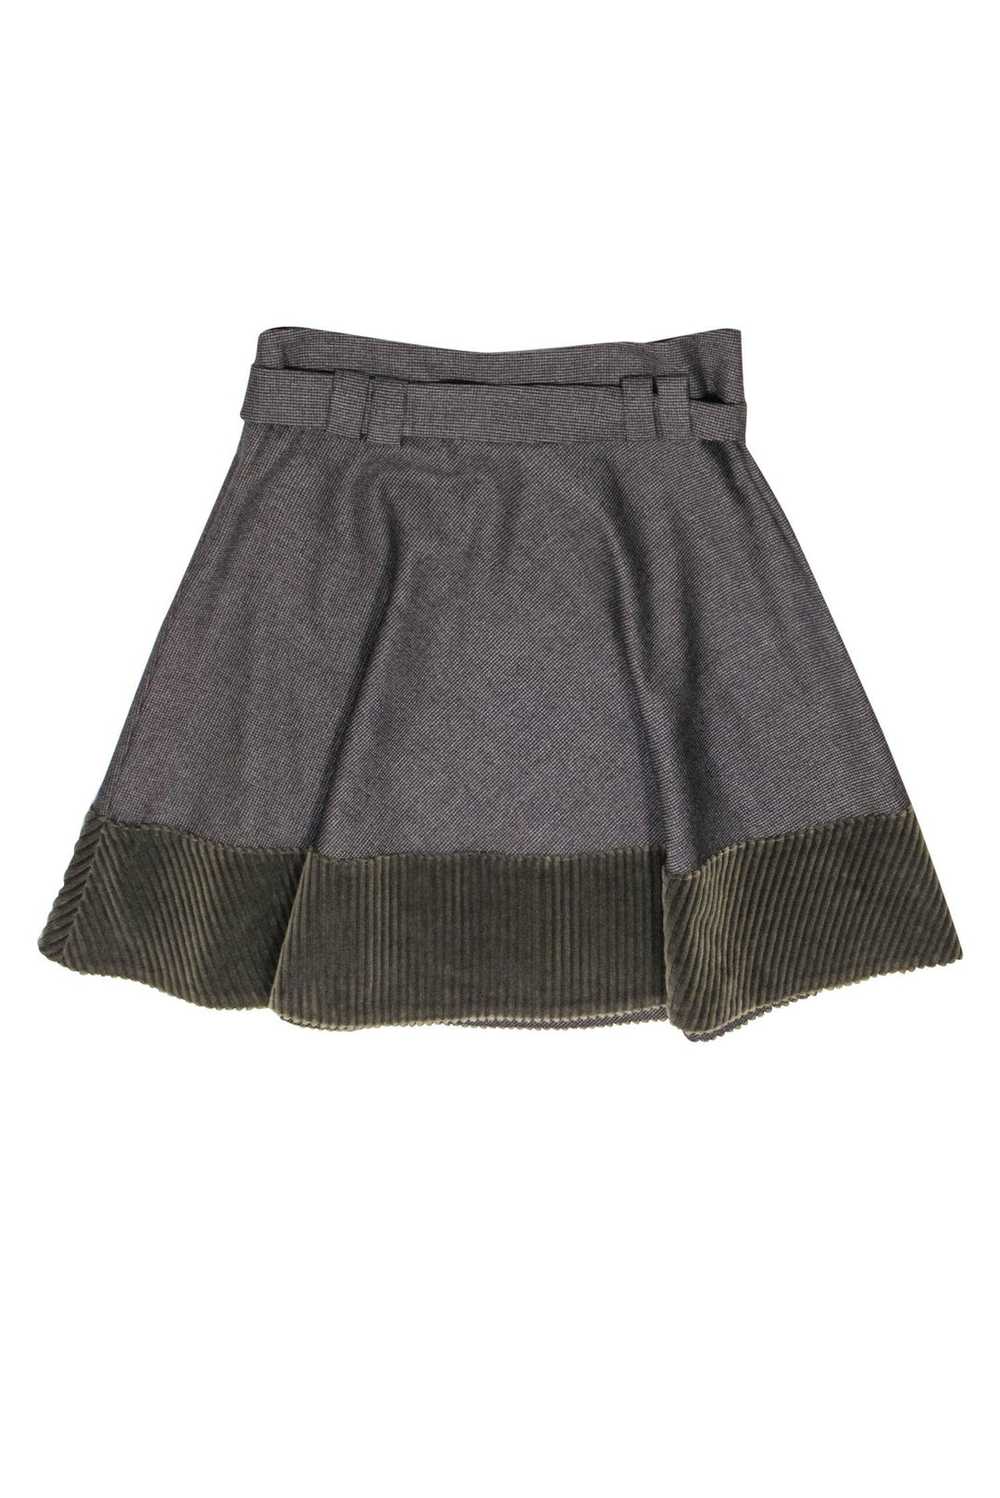 Akris Punto - Brown Houndstooth Wool Skirt w/ Cor… - image 2